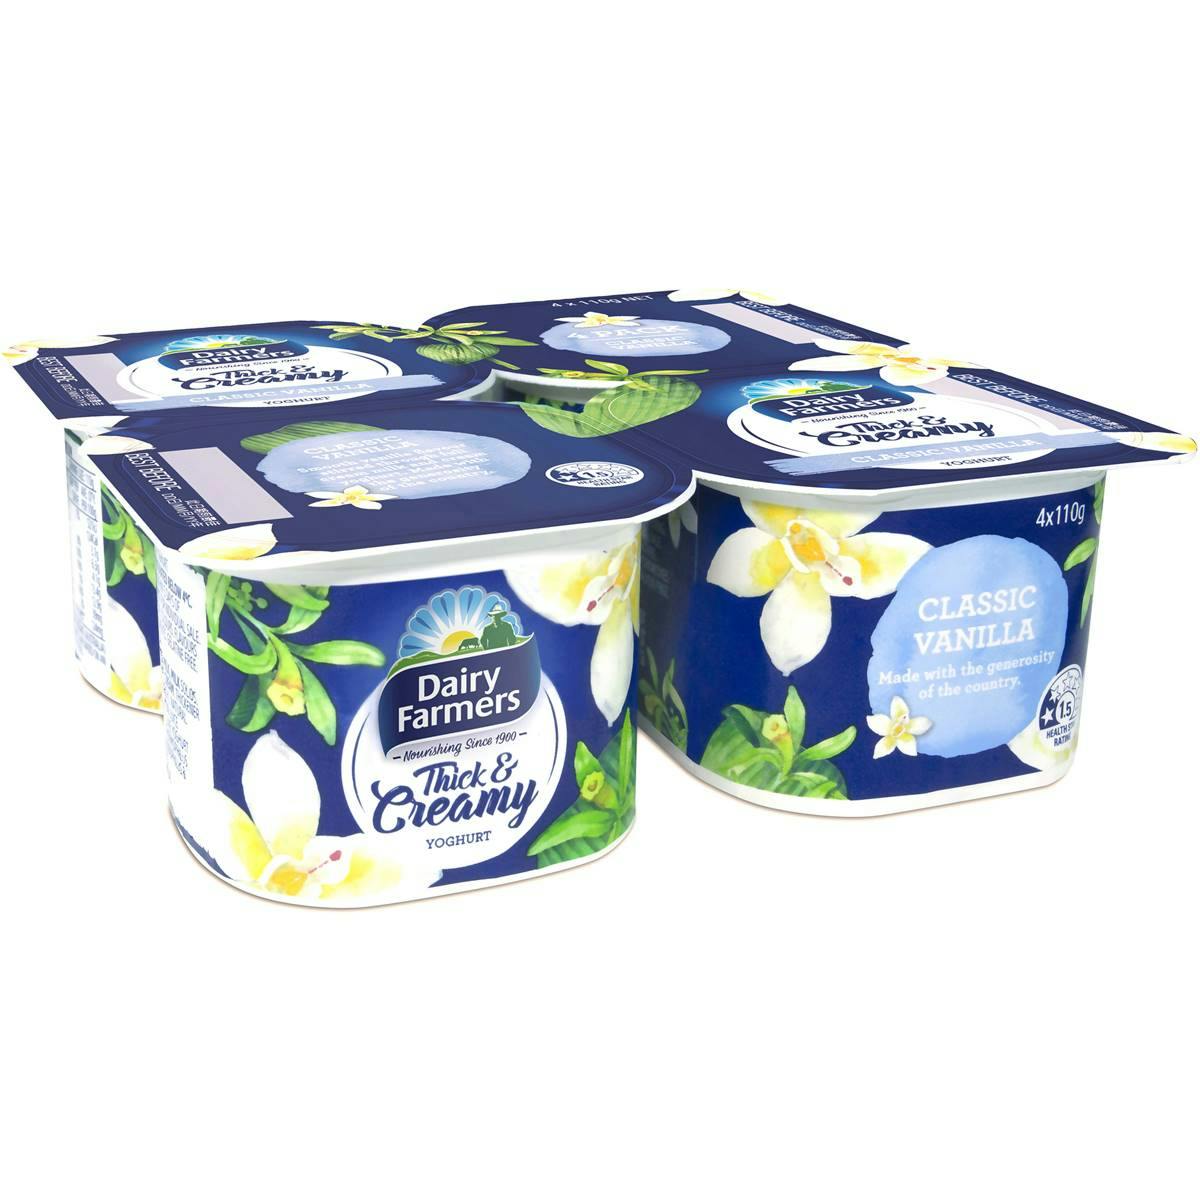 Dairy Farmers Thick & Creamy Vanilla Yoghurt 4 Pack